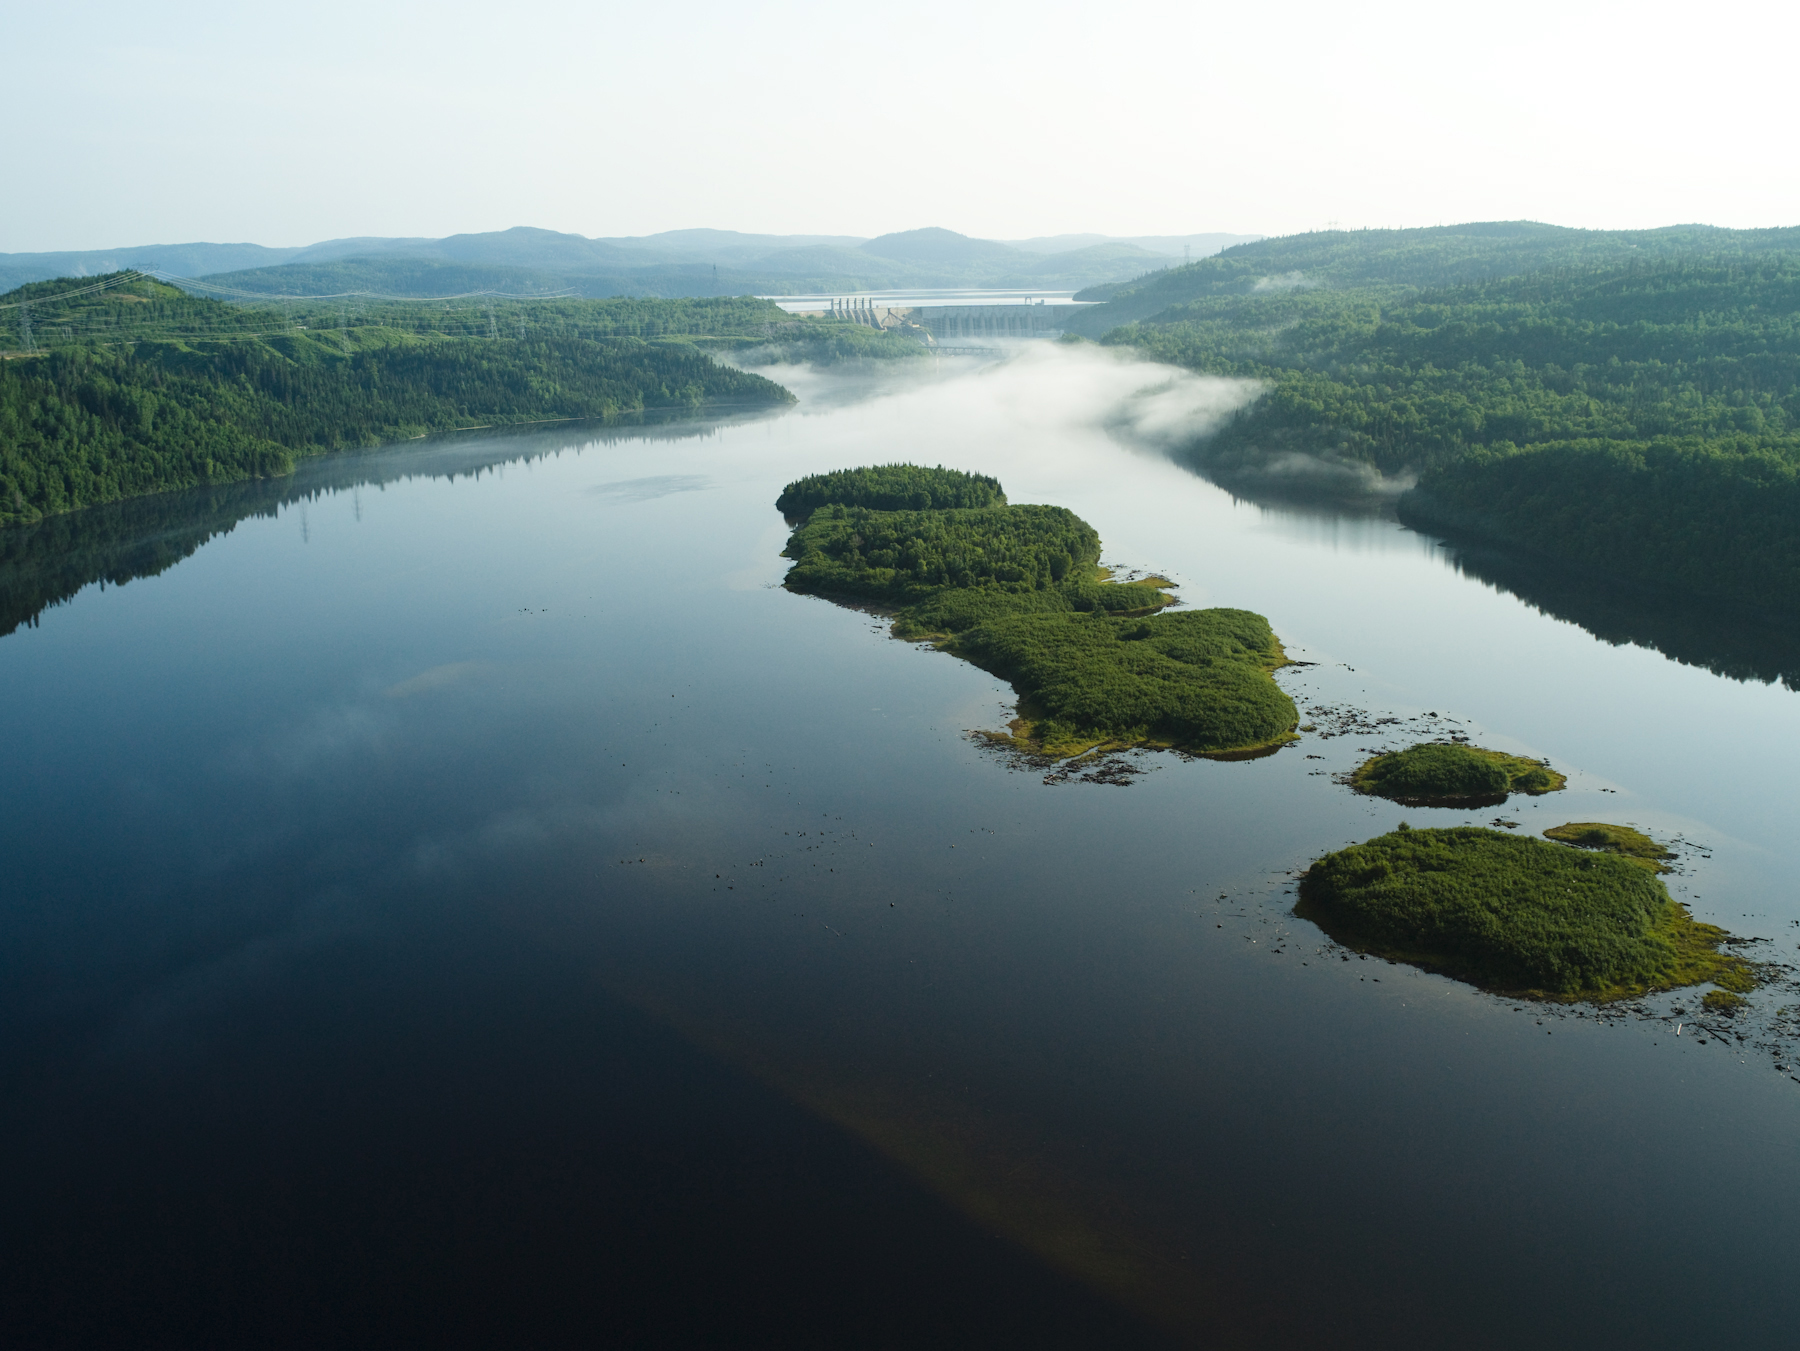 Hydro-Quebec's Jean-Lesage hydroelectric dam